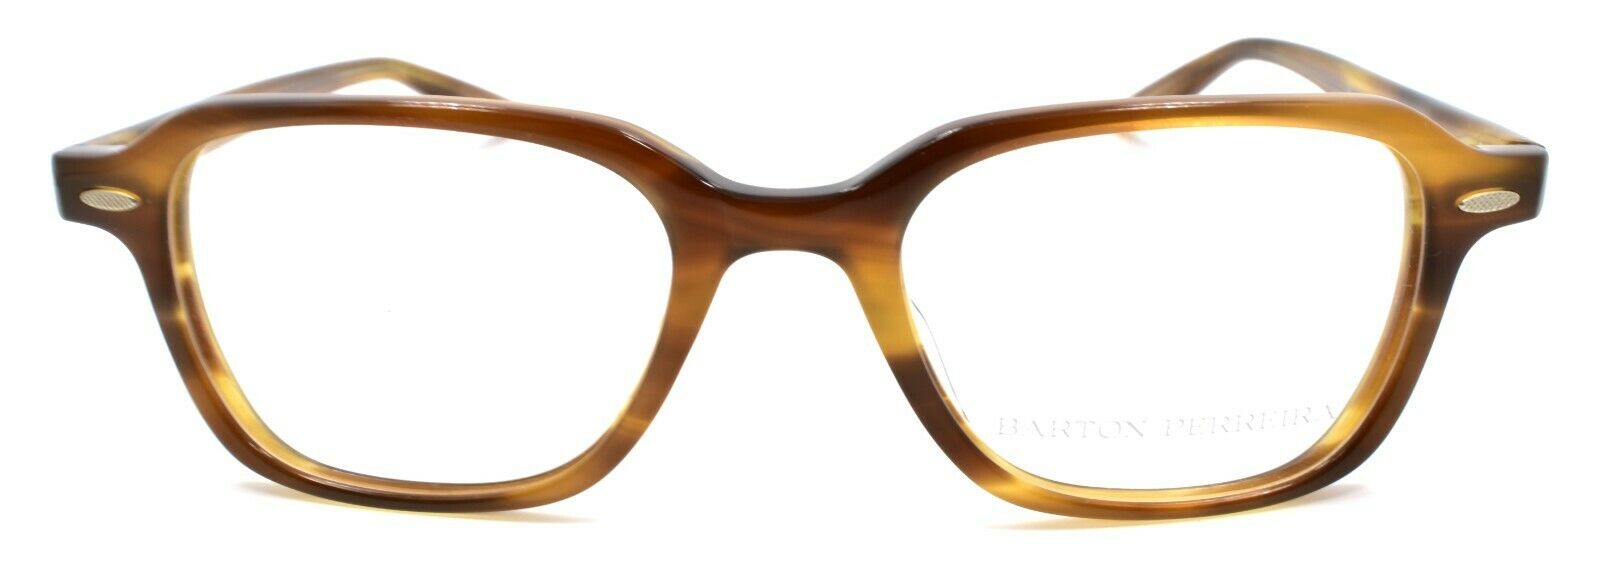 2-Barton Perreira Carlton UMT Unisex Eyeglasses Frames 48-19-138 Umber Tortoise-672263037750-IKSpecs